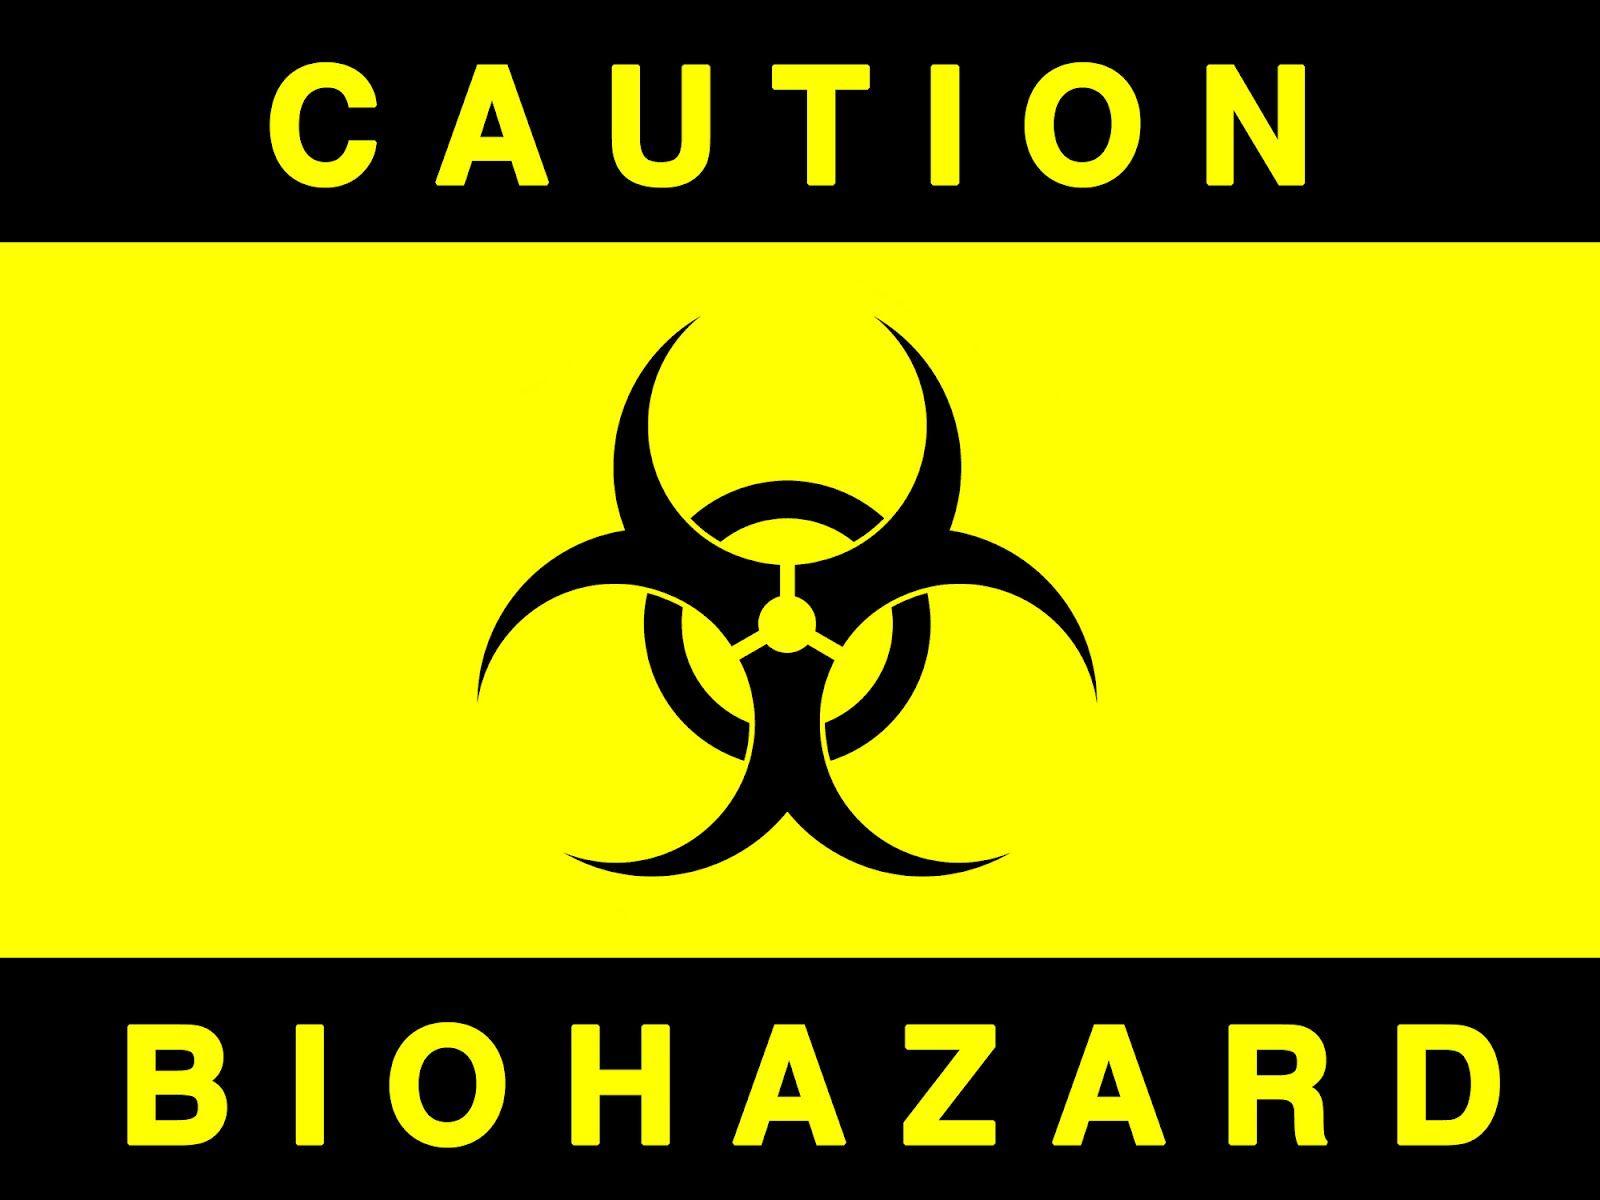 biohazard symbol png. Mad